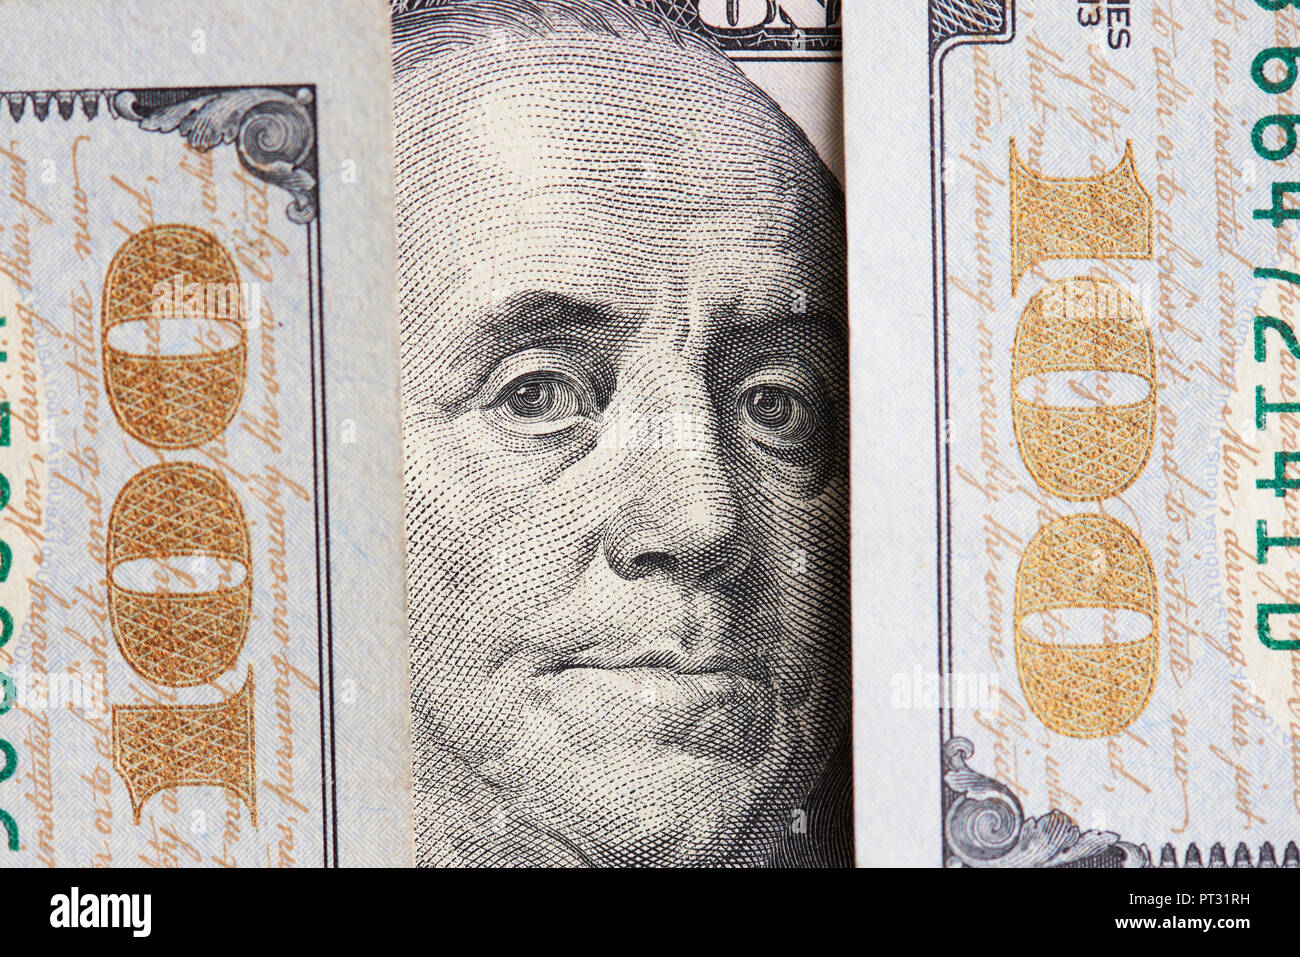 Franklin president portrait on 100 dollar bill close up view Stock Photo